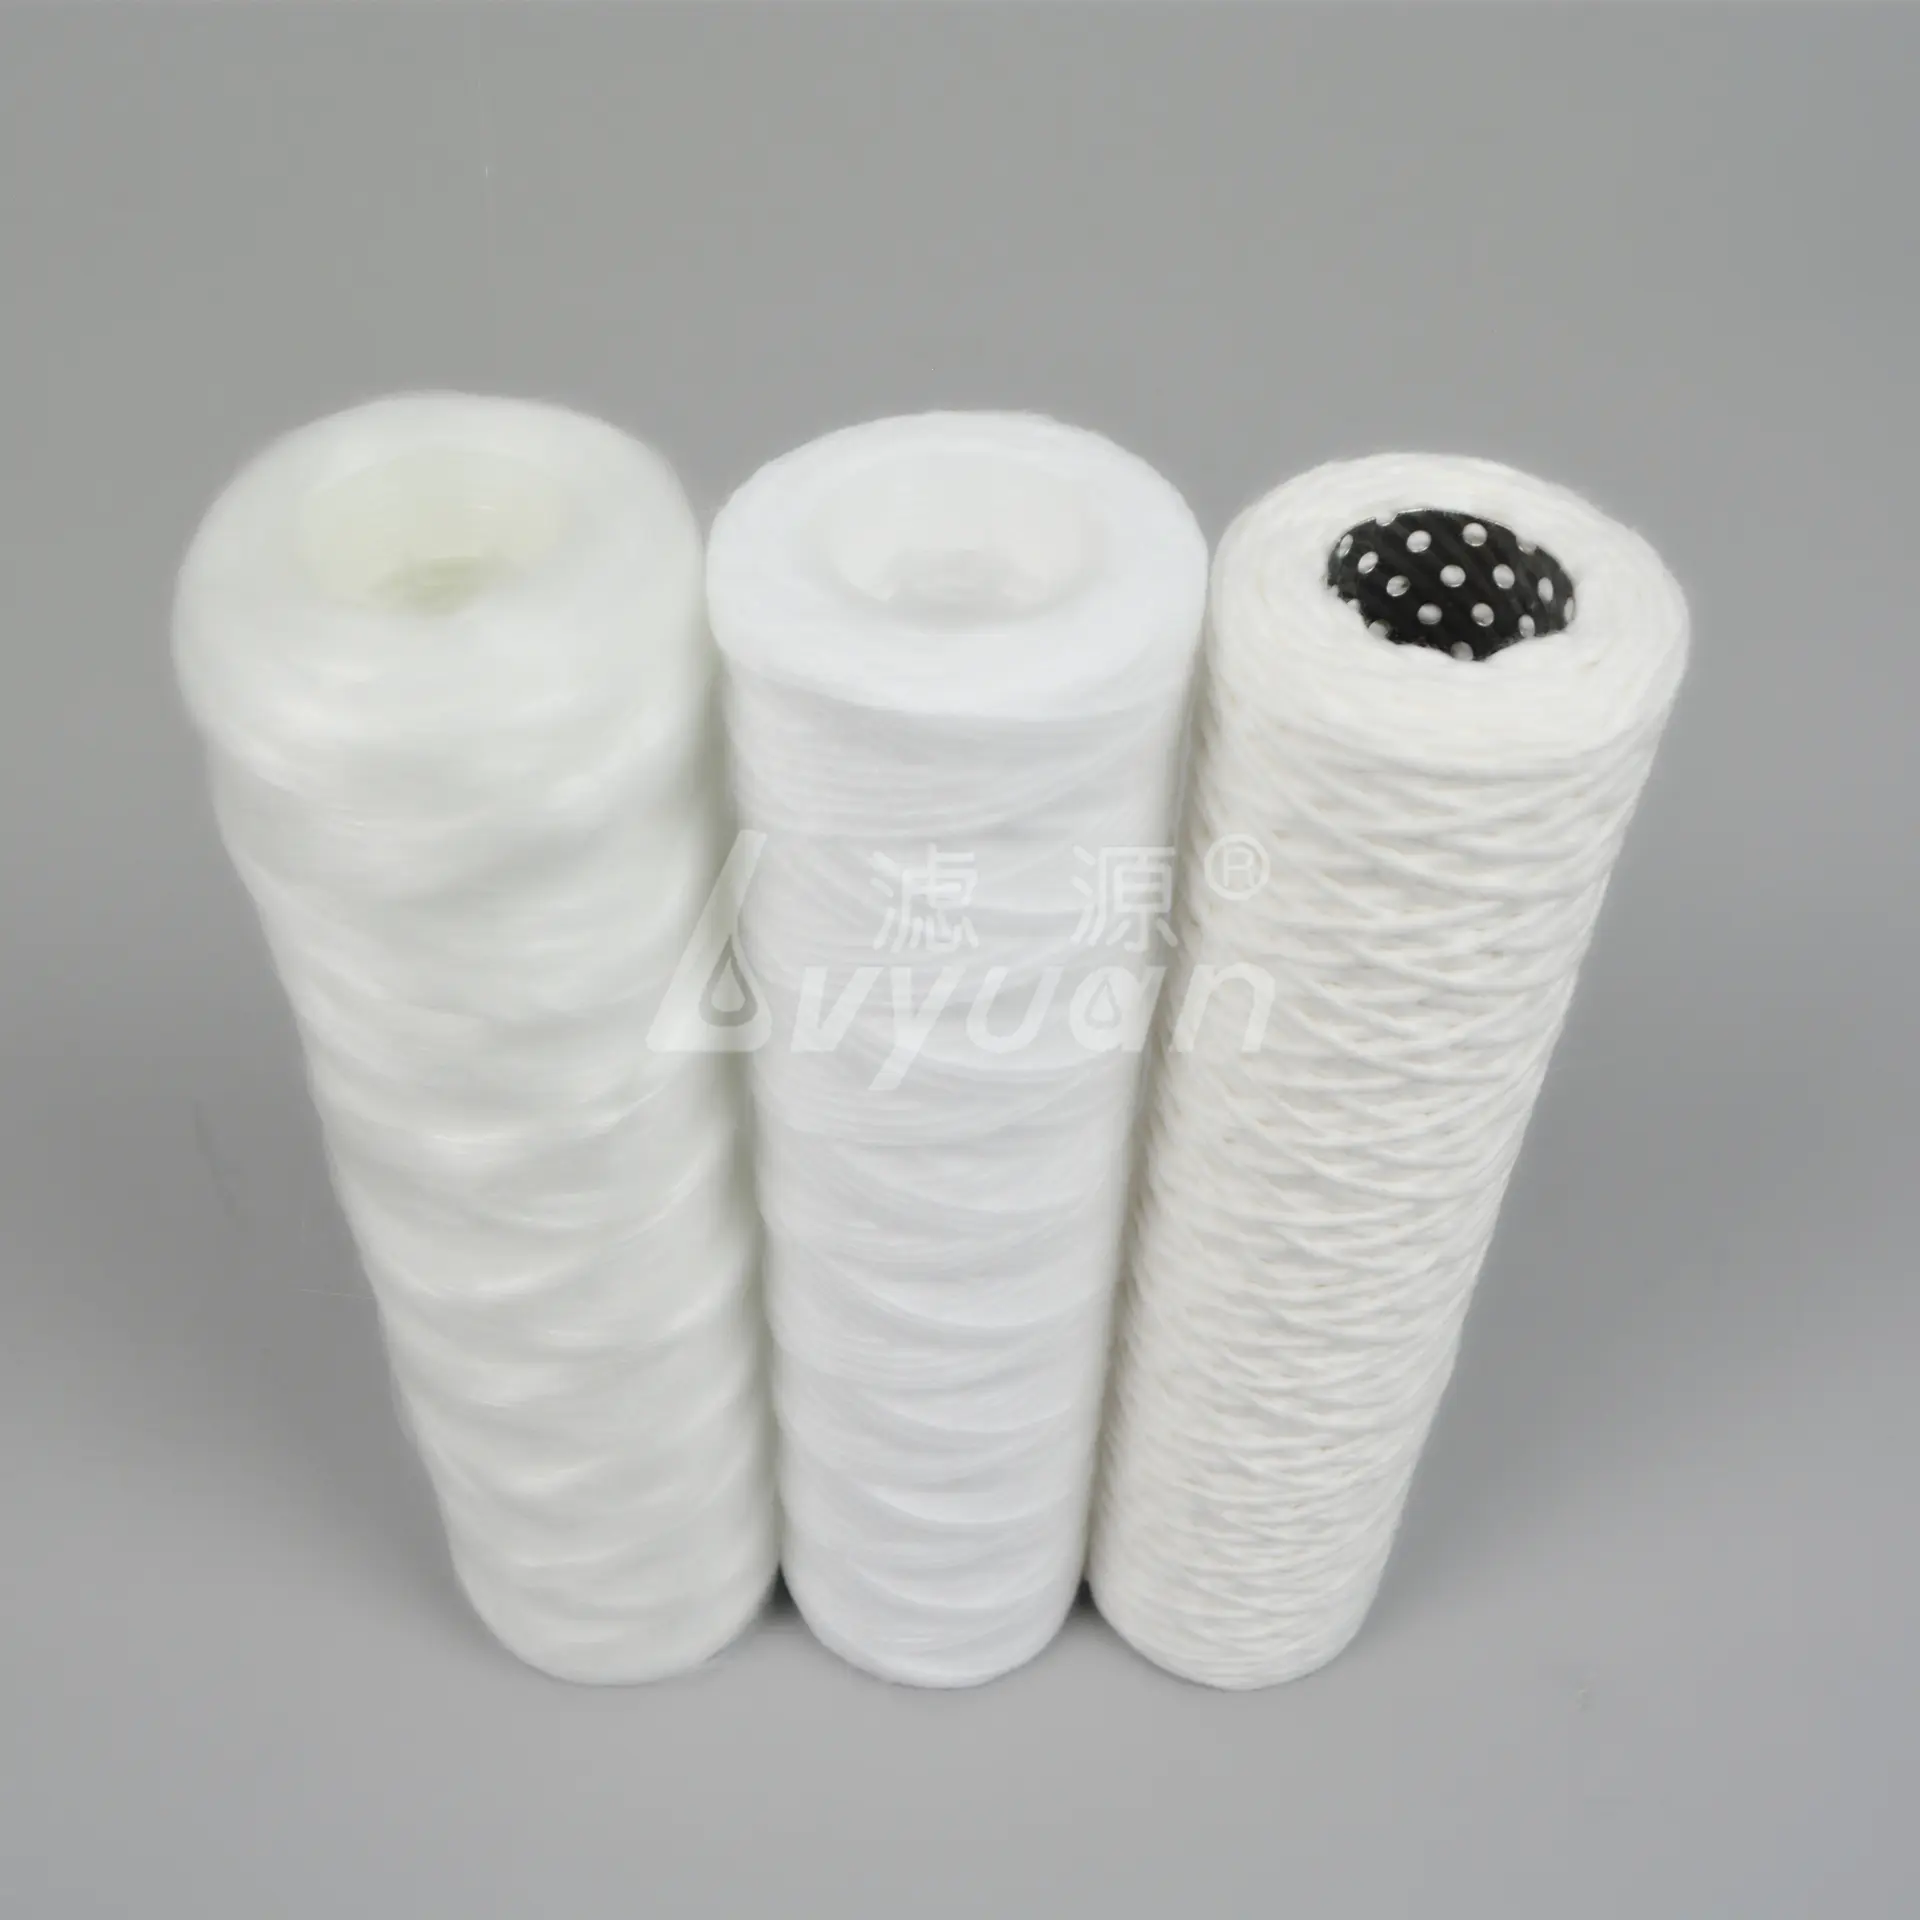 10 inch pp sediment spun String wound filter cartridge fiberglass/cotton Filter for water filtration